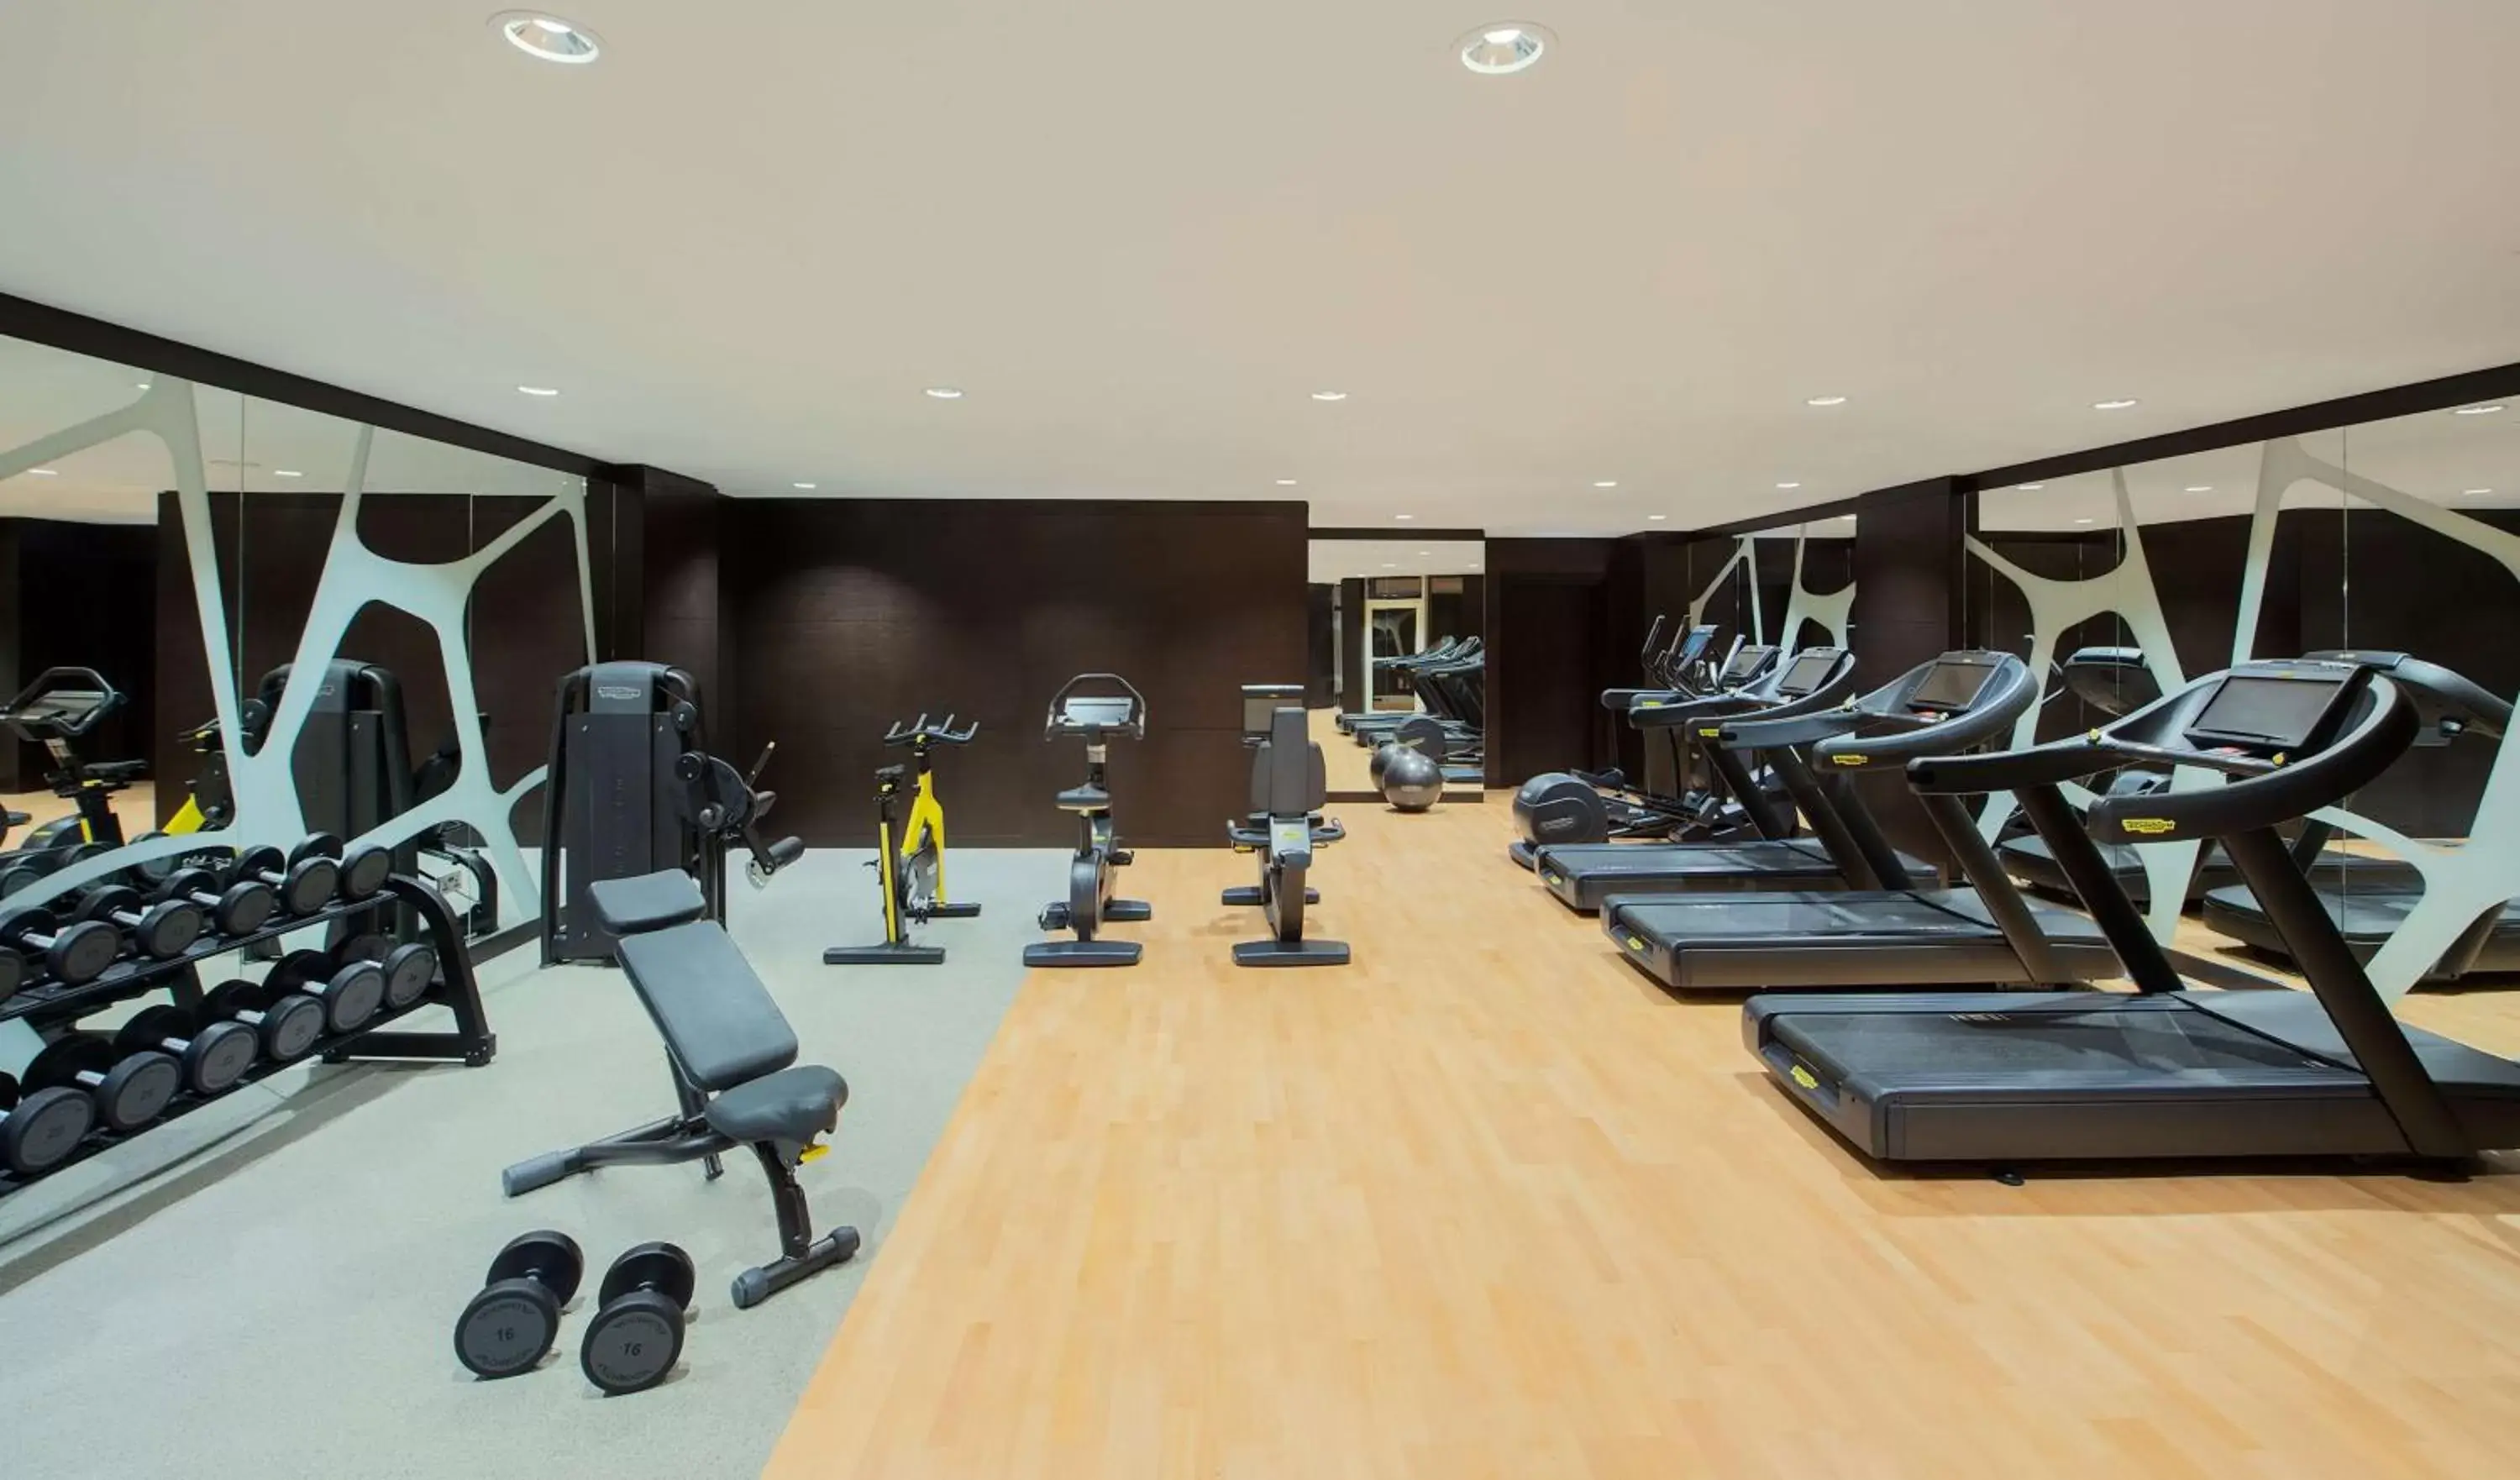 Fitness centre/facilities, Fitness Center/Facilities in Doubletree By Hilton Doha - Al Sadd